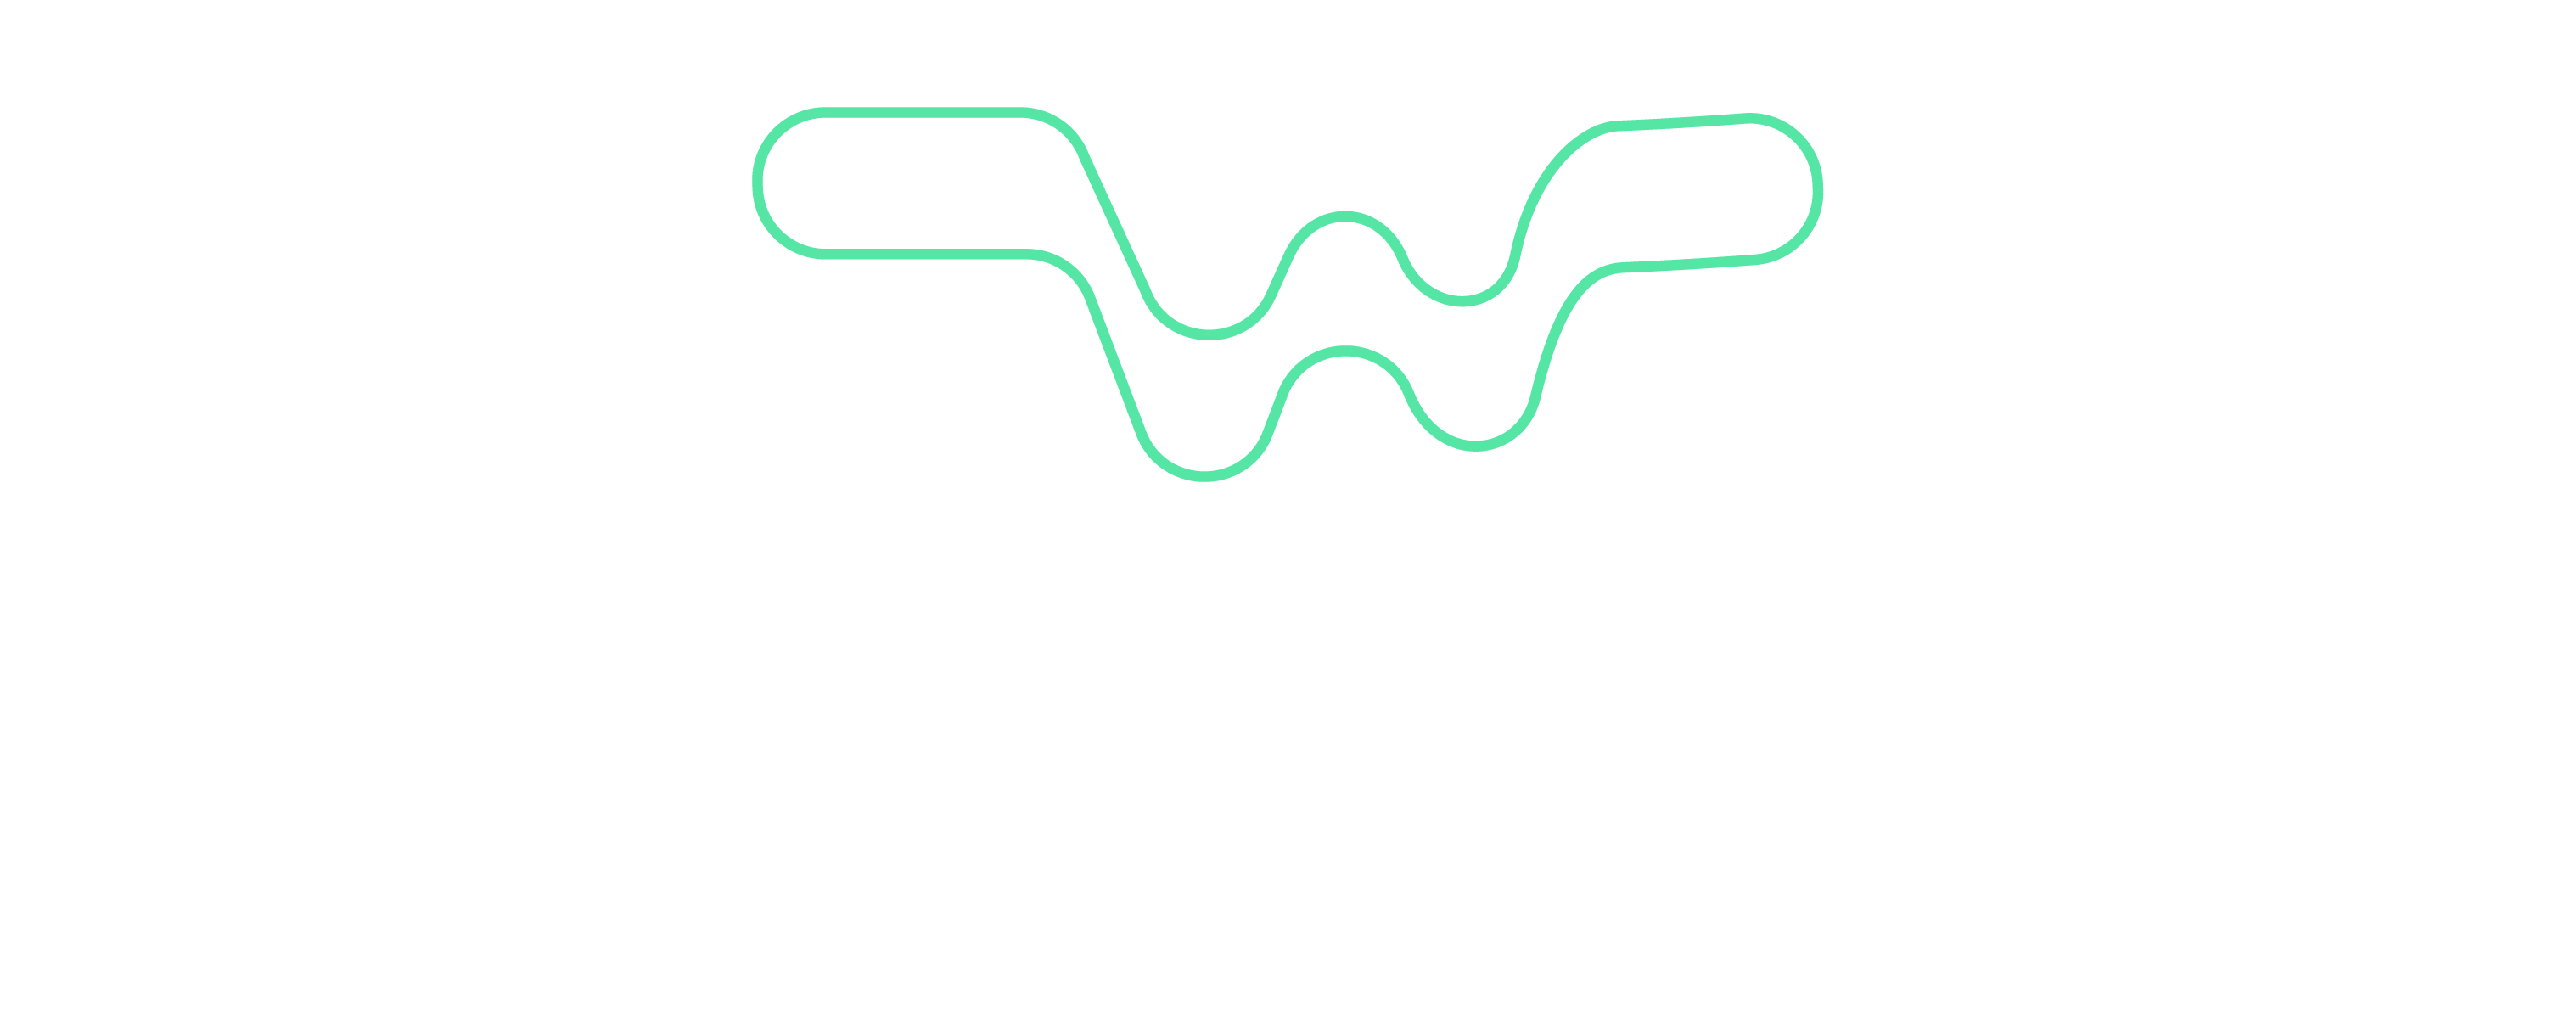 The Web Creators